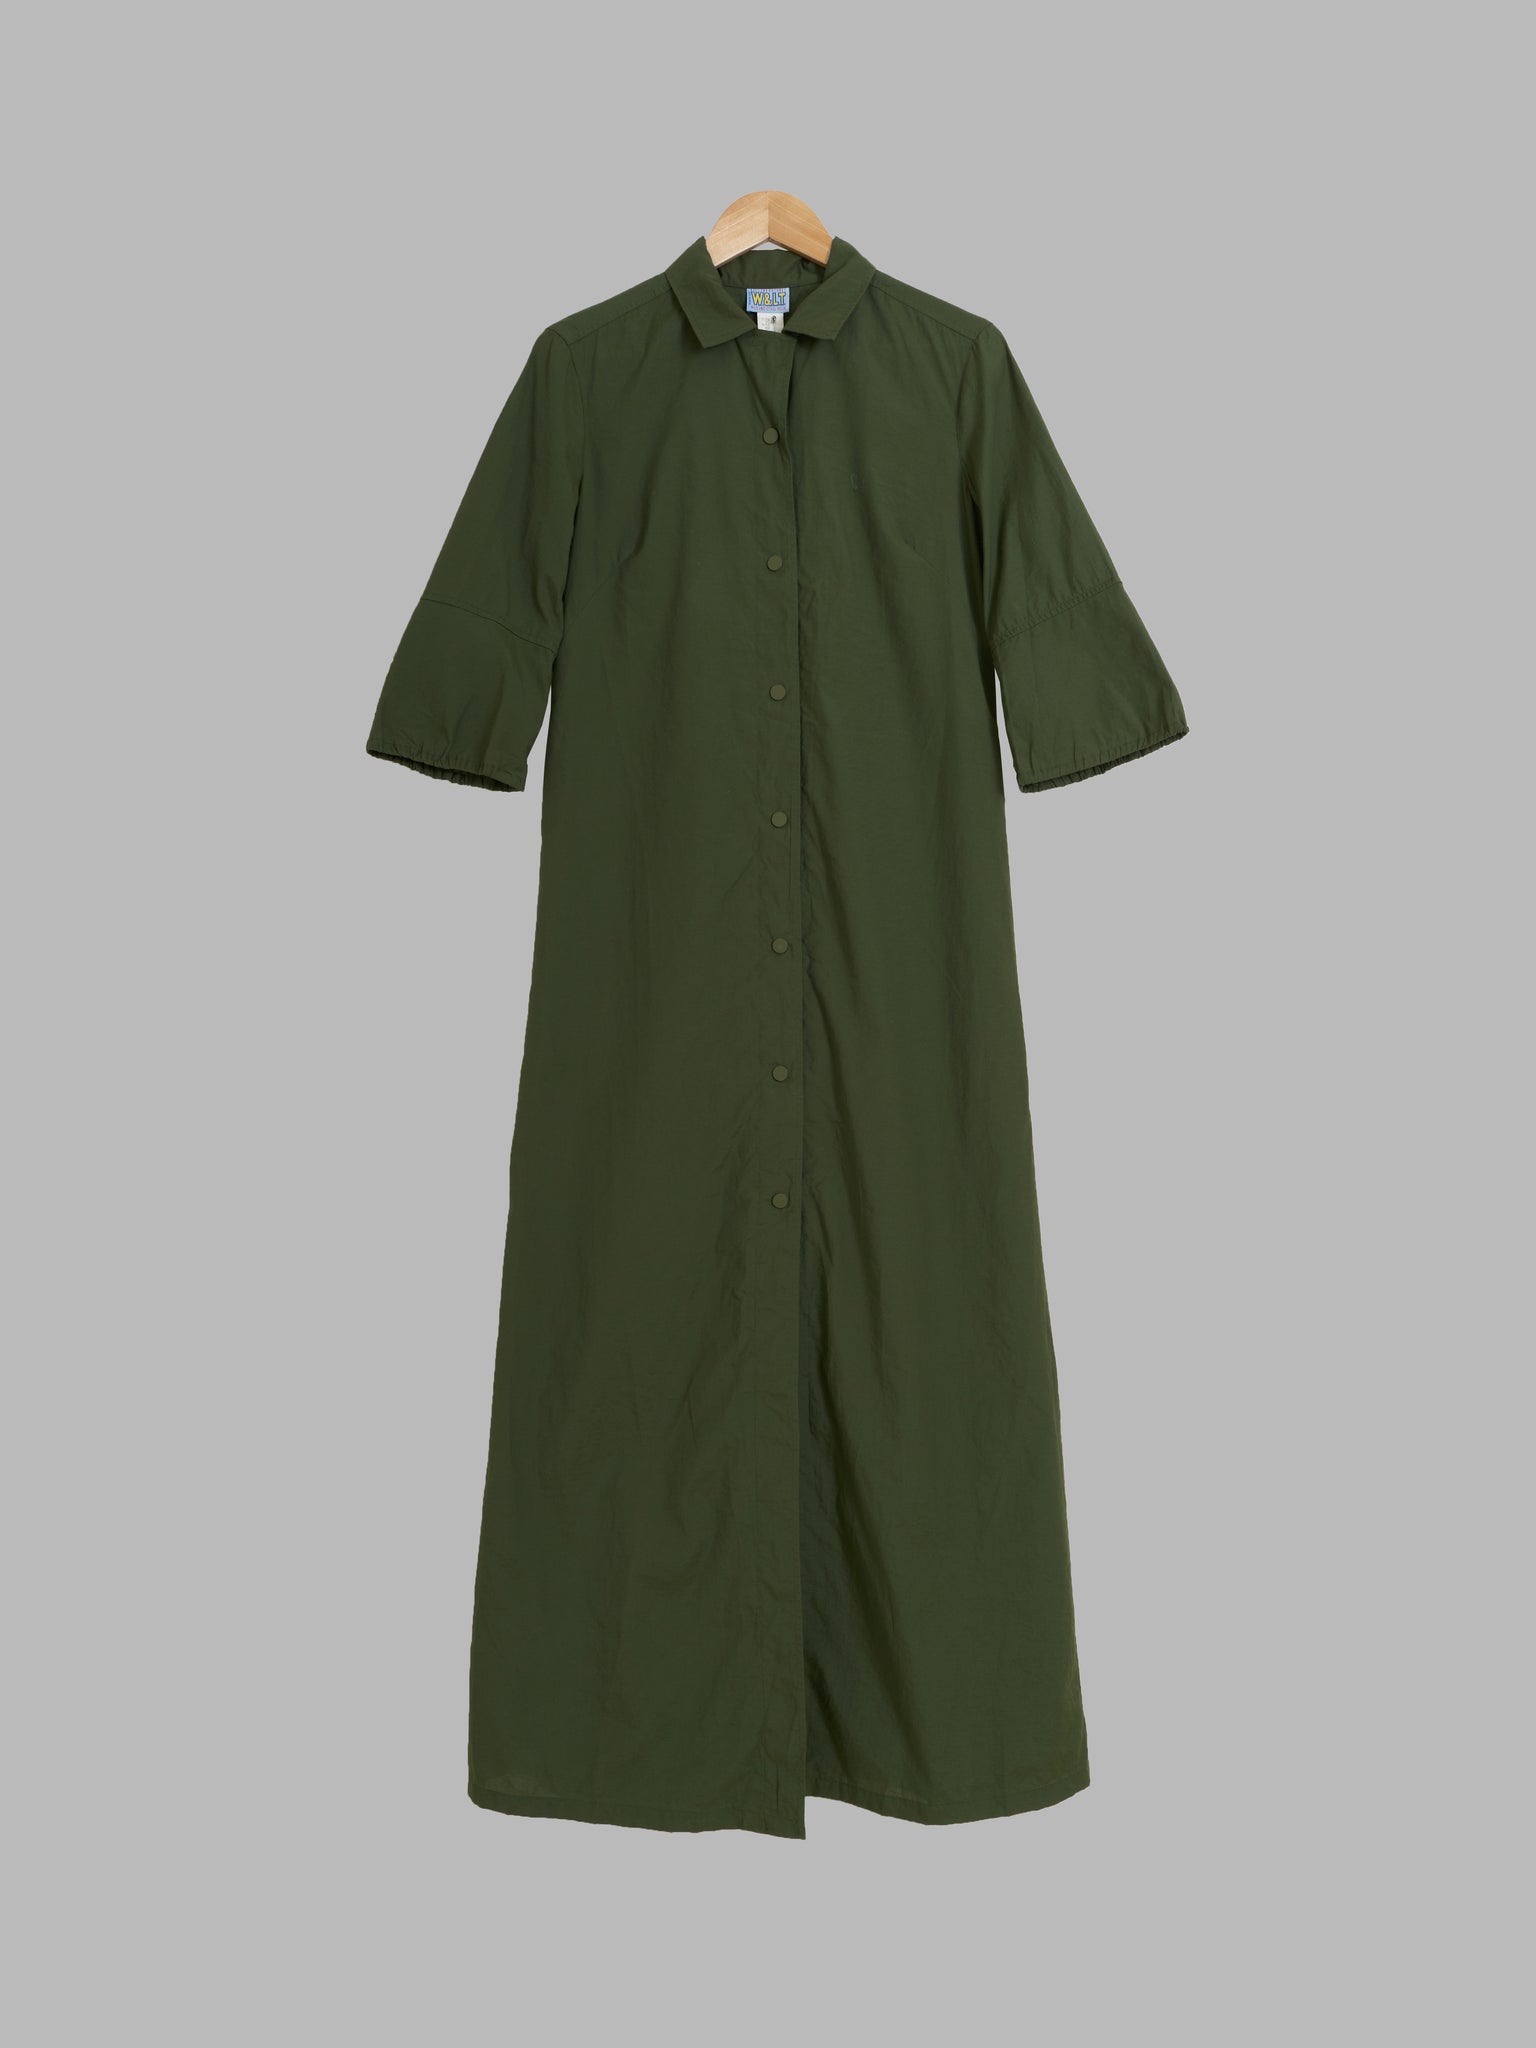 W-LT Walter Van Beirendonck 1990s khaki bell sleeve full length shirt dress - M